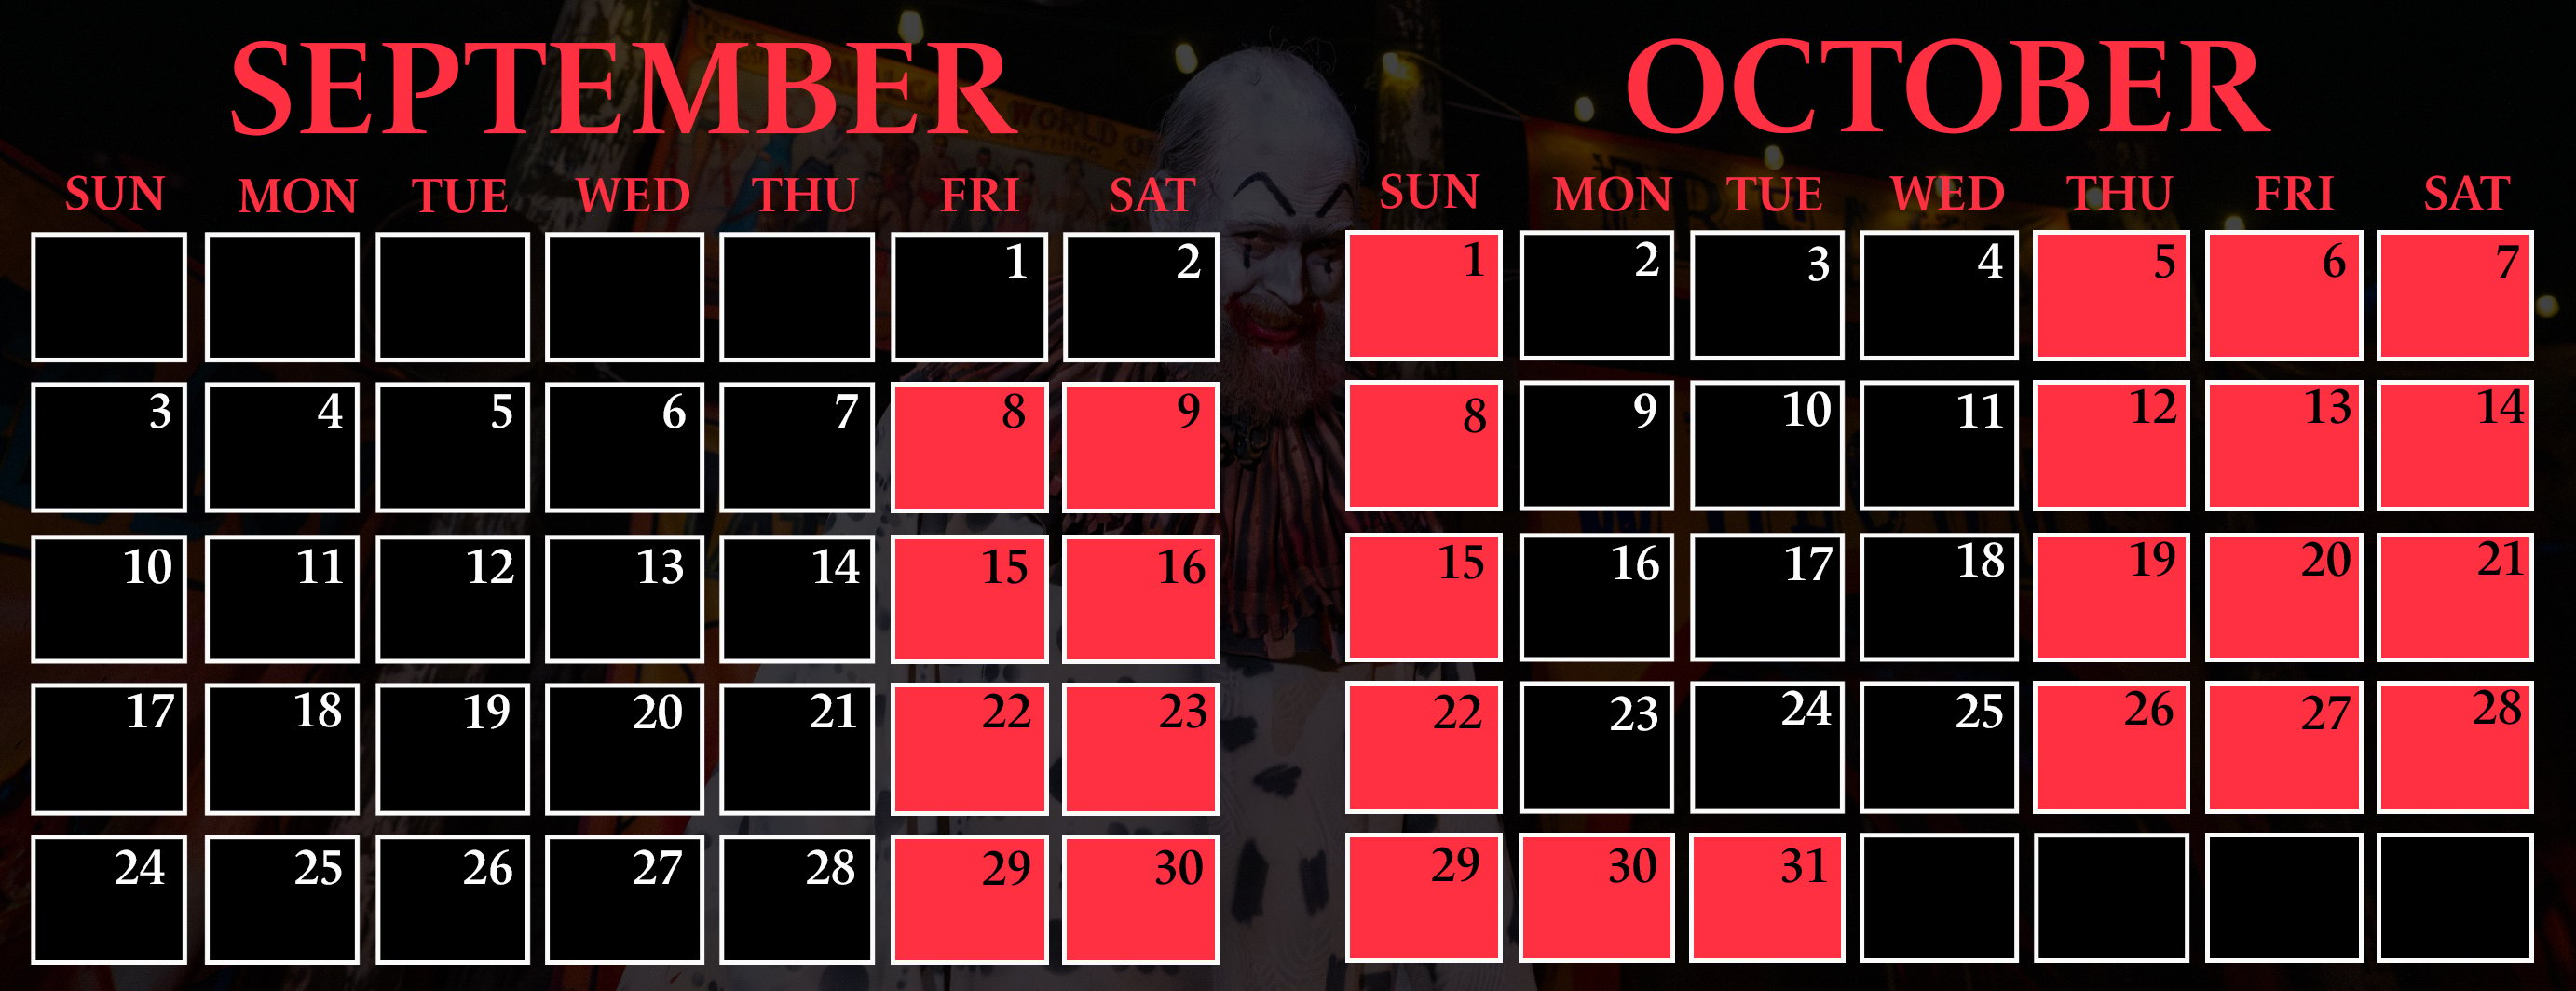 Busch Gardens Tampa Bay Howl-O-Scream Calendar.